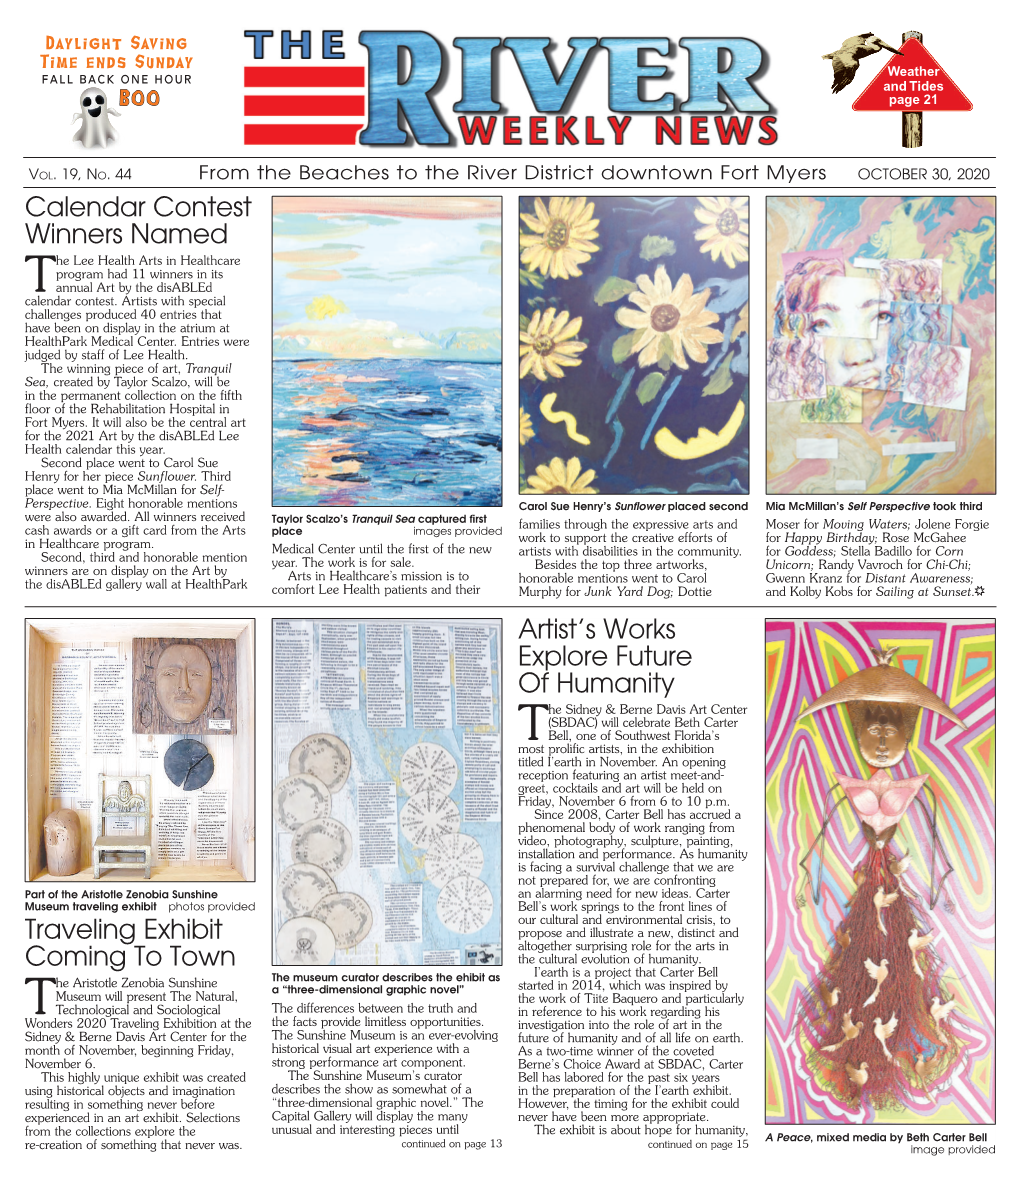 River Weekly News Read Us Online: LORKEN Publications, Inc